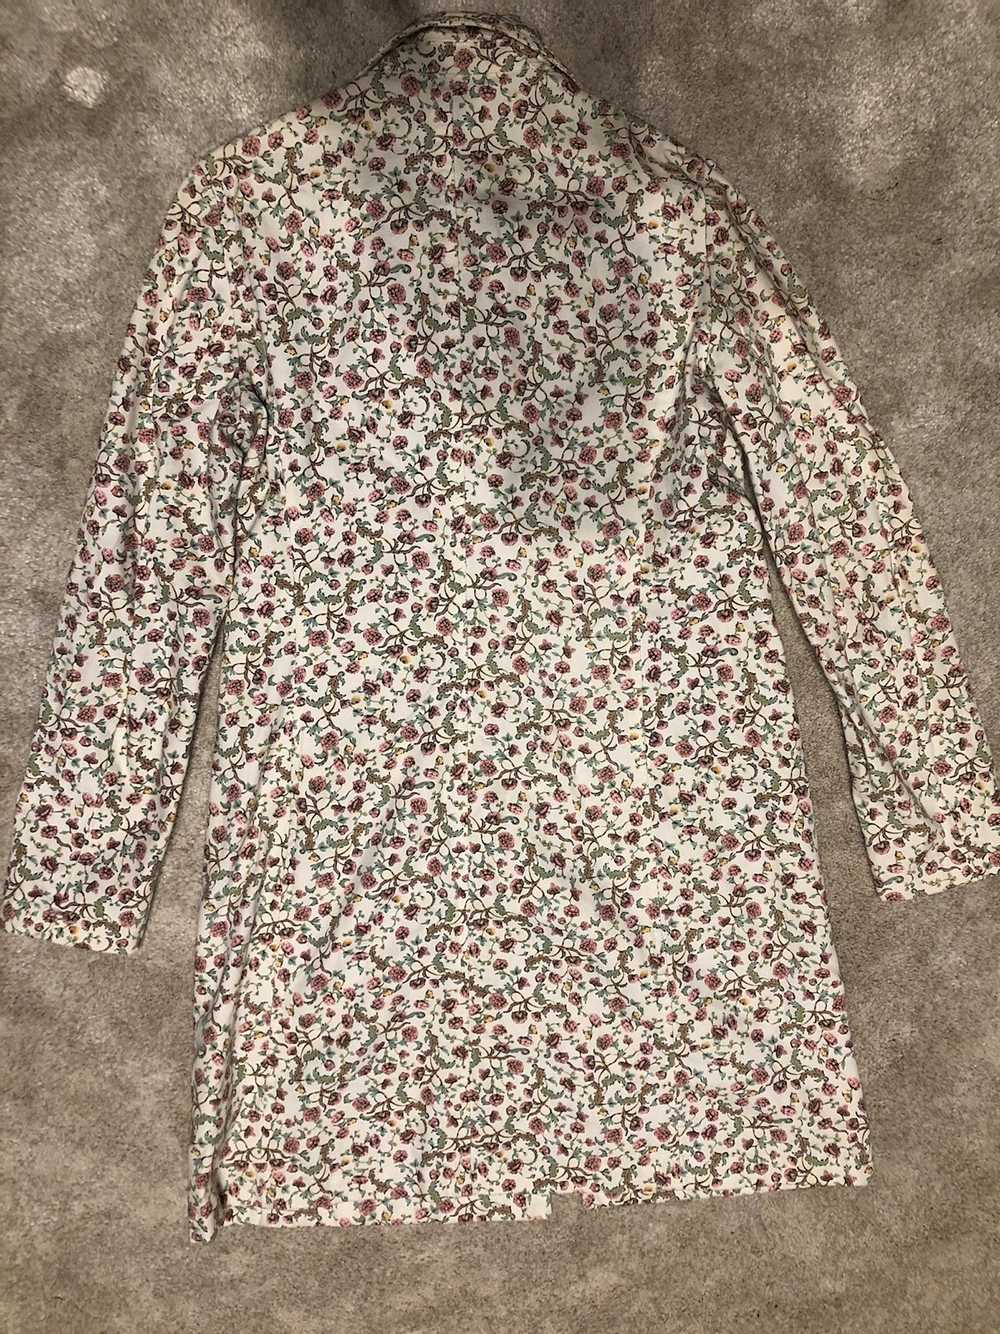 Tara Jarmon White Coat with red flowers - image 3